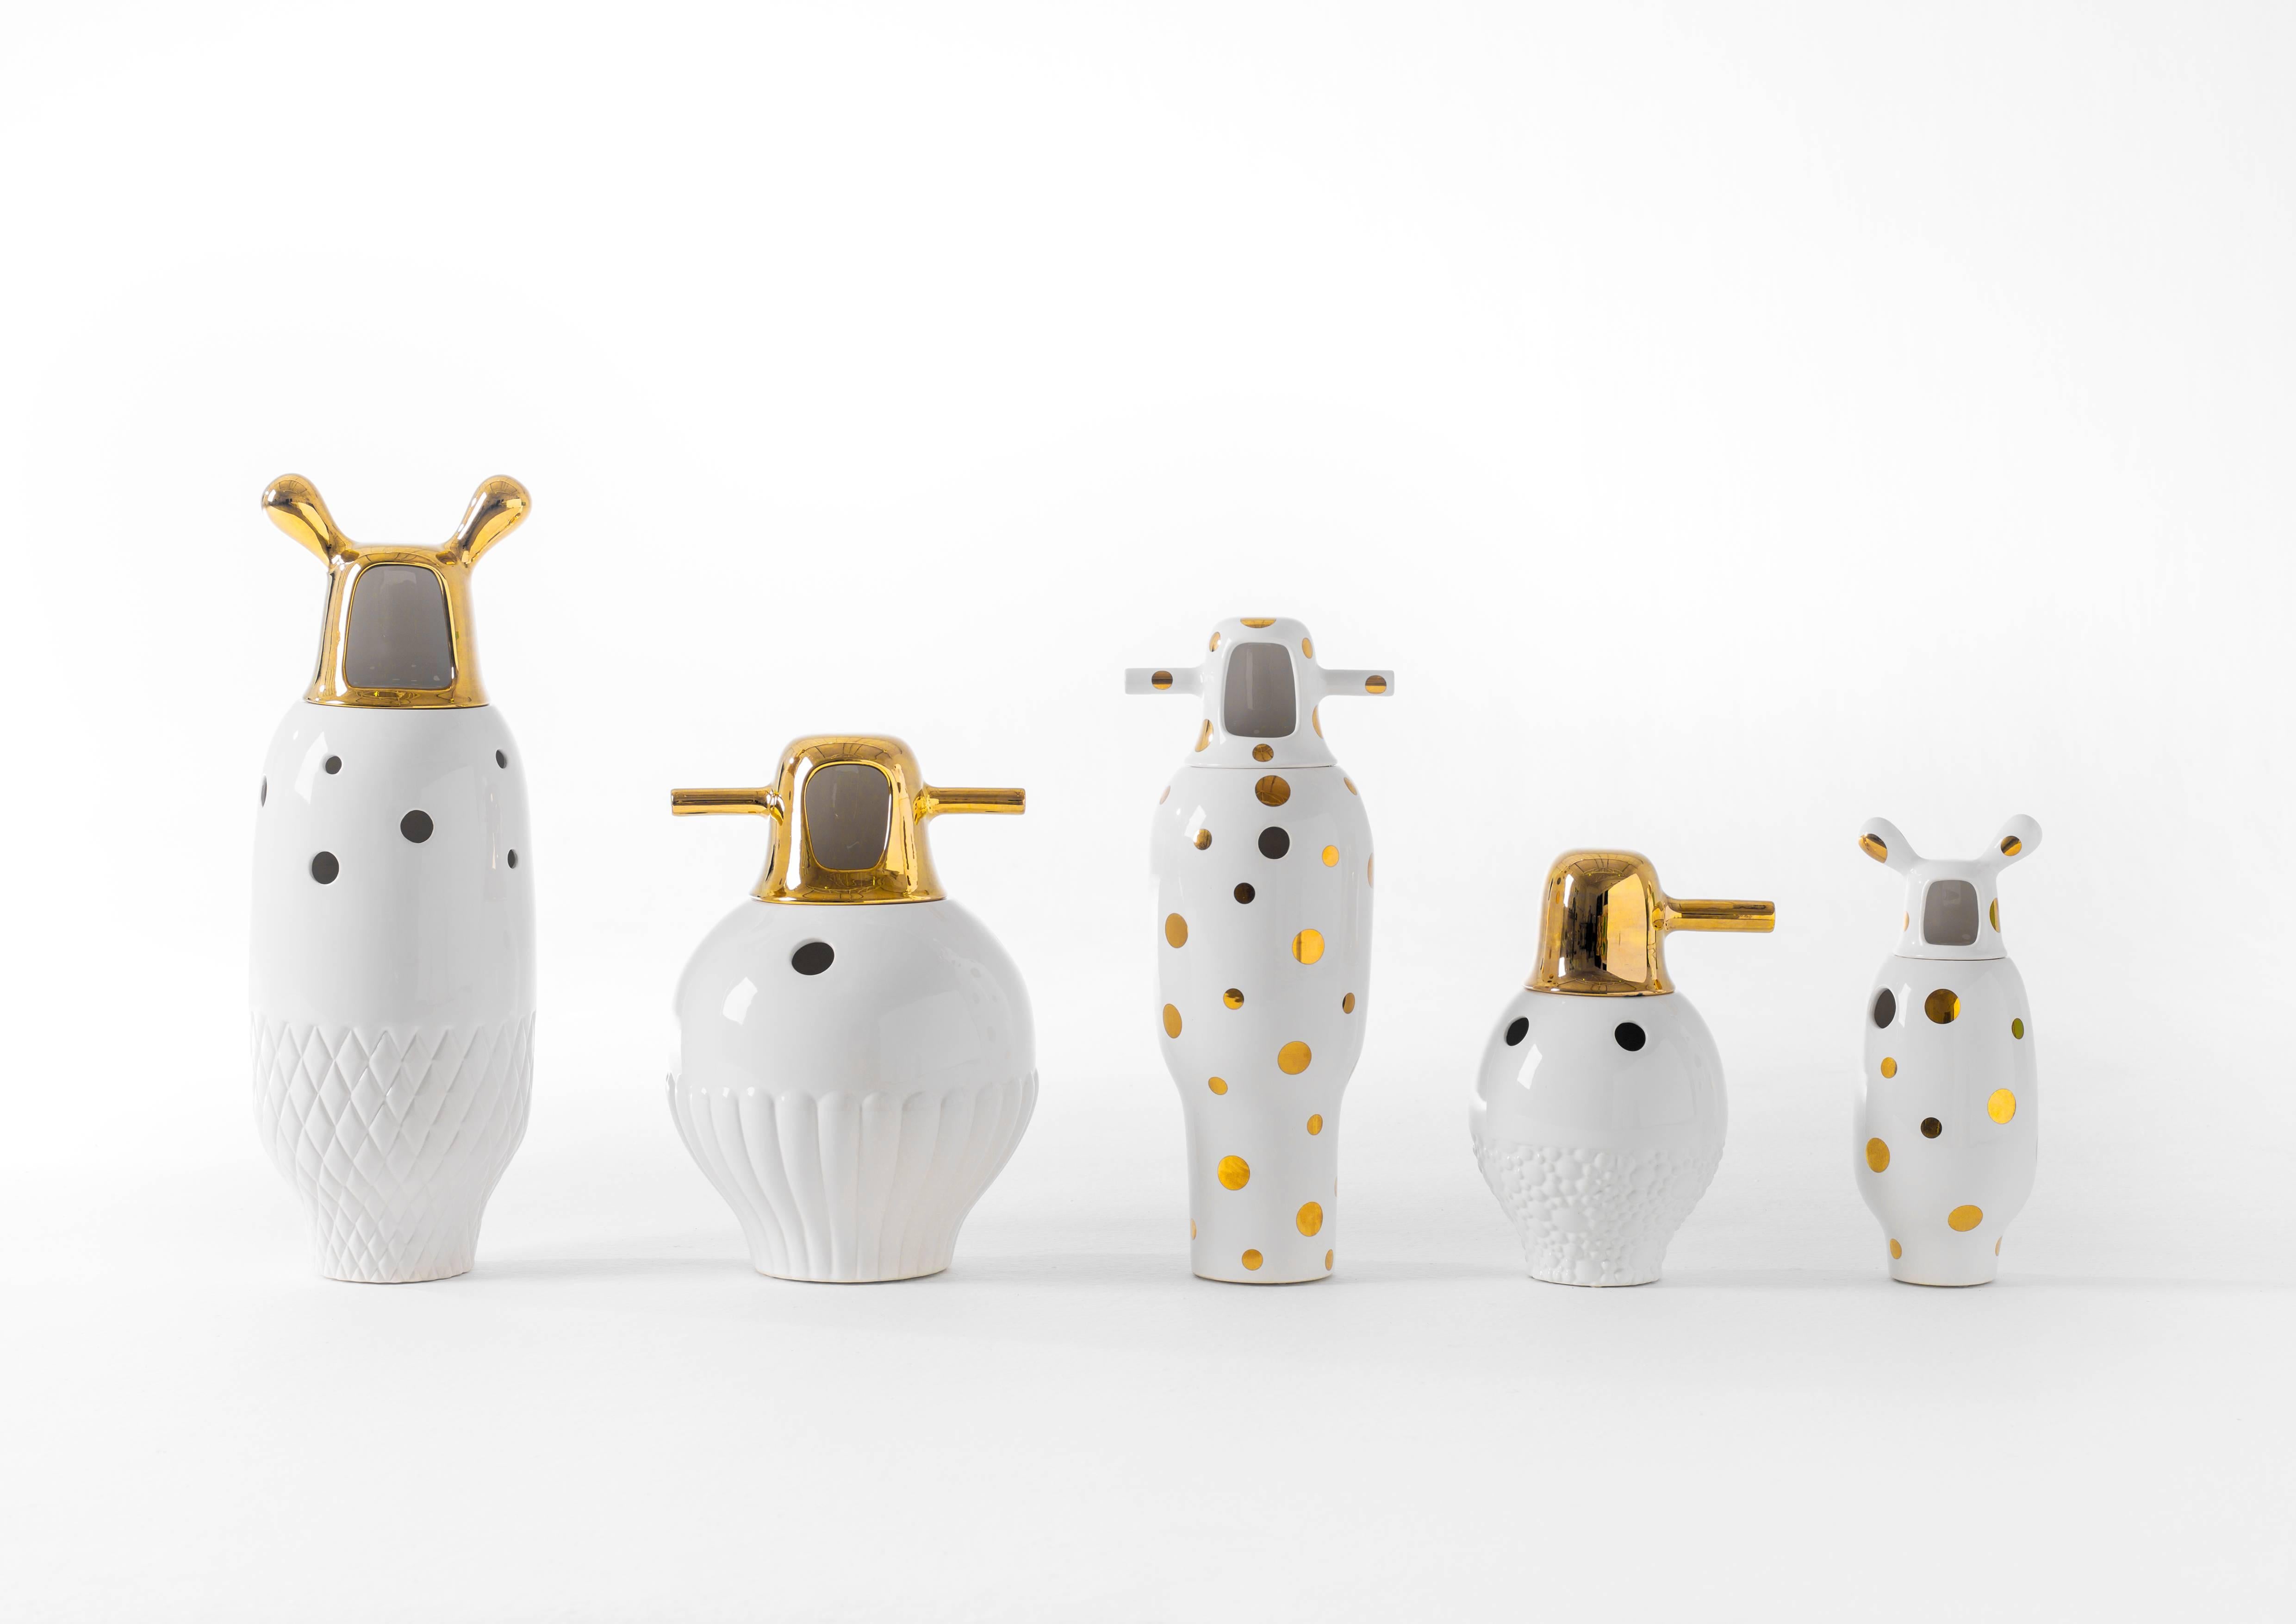 Modern Contemporary Glazed Ceramic Showtime Vase by Jaime Hayon 24 carat gold details For Sale